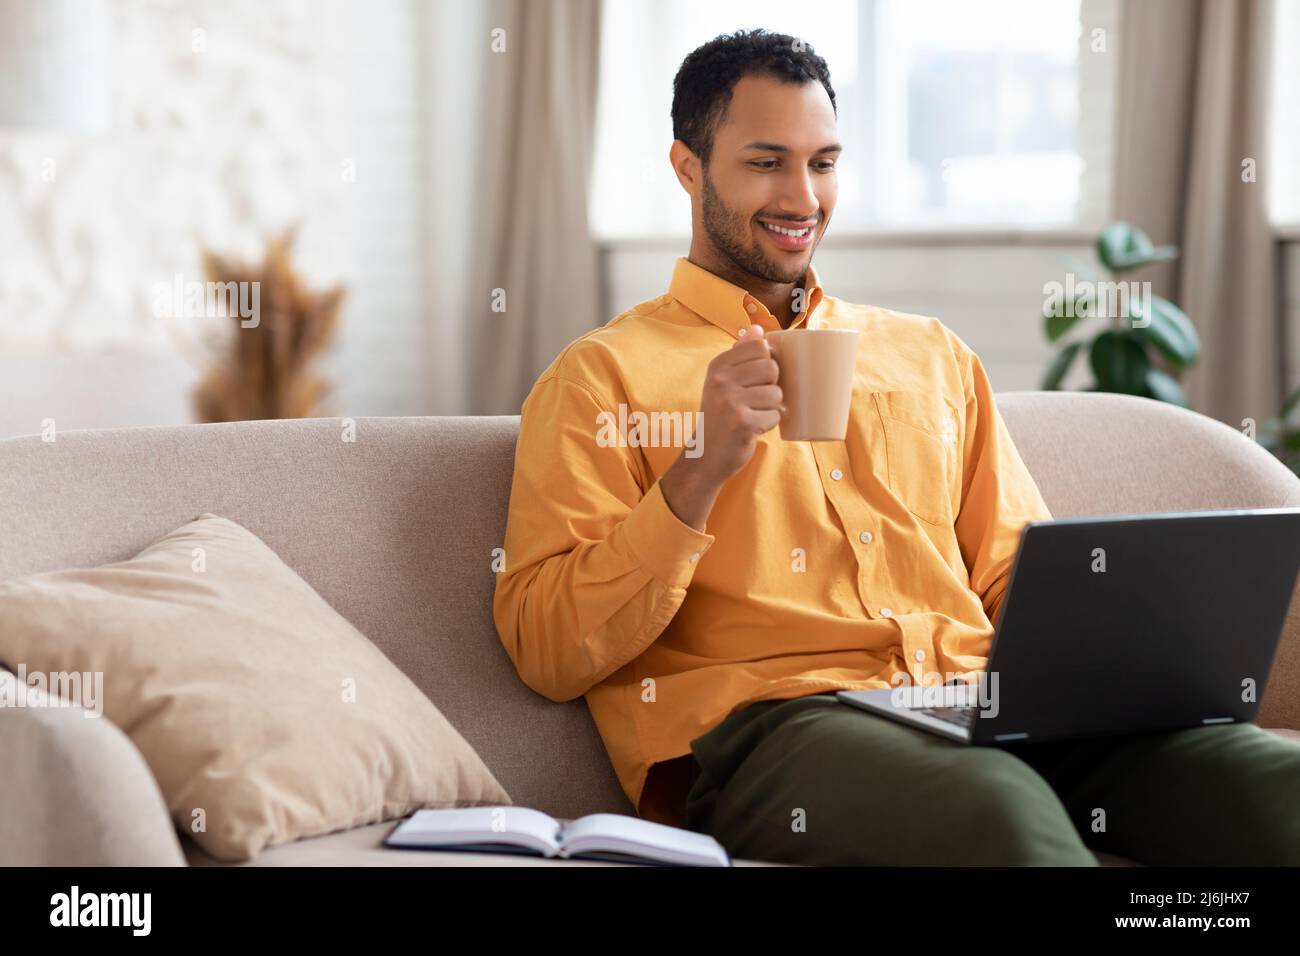 Smiling Arab man watching video on computer, drinking coffee Stock Photo